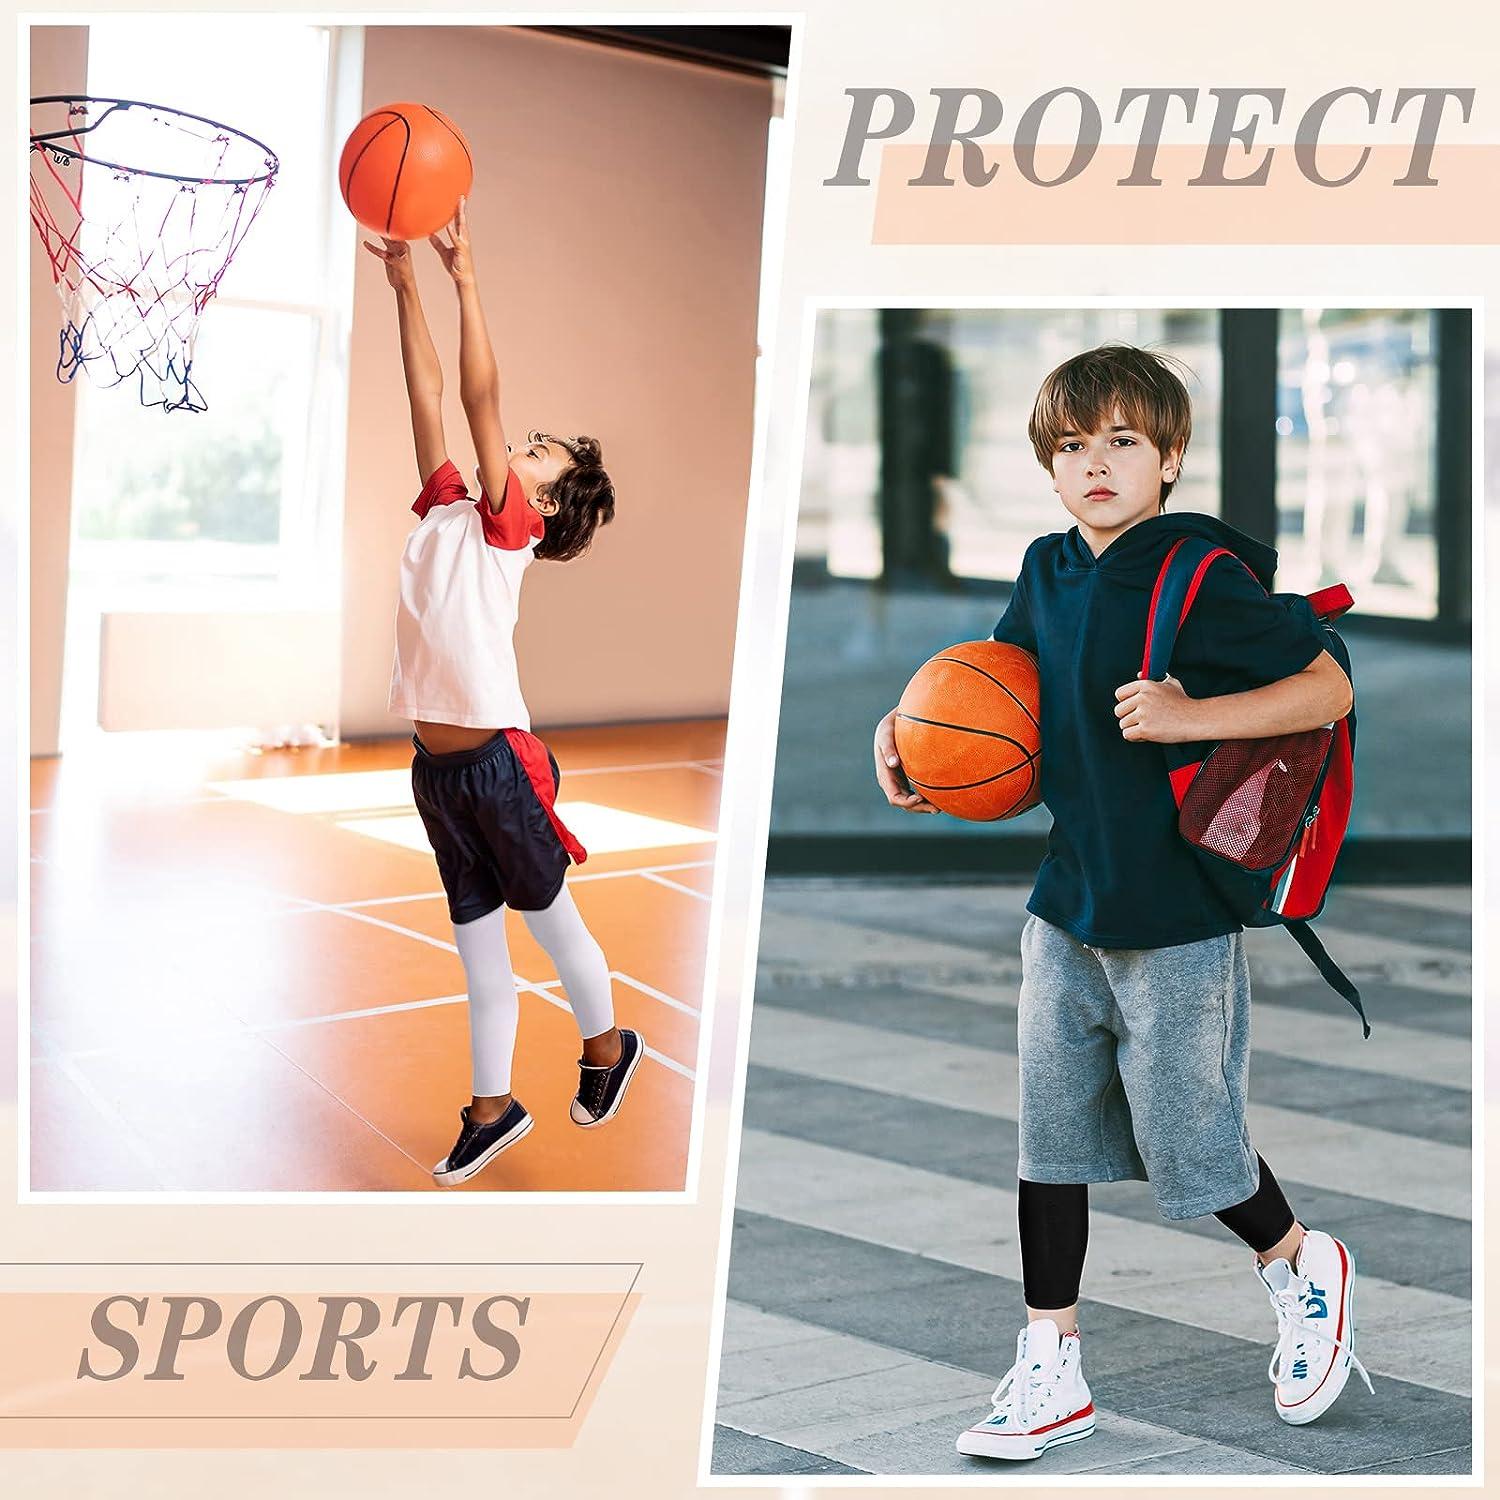 Sports Anti-slip Compression Leg Sleeve Basketball Calf Support (Black M) 